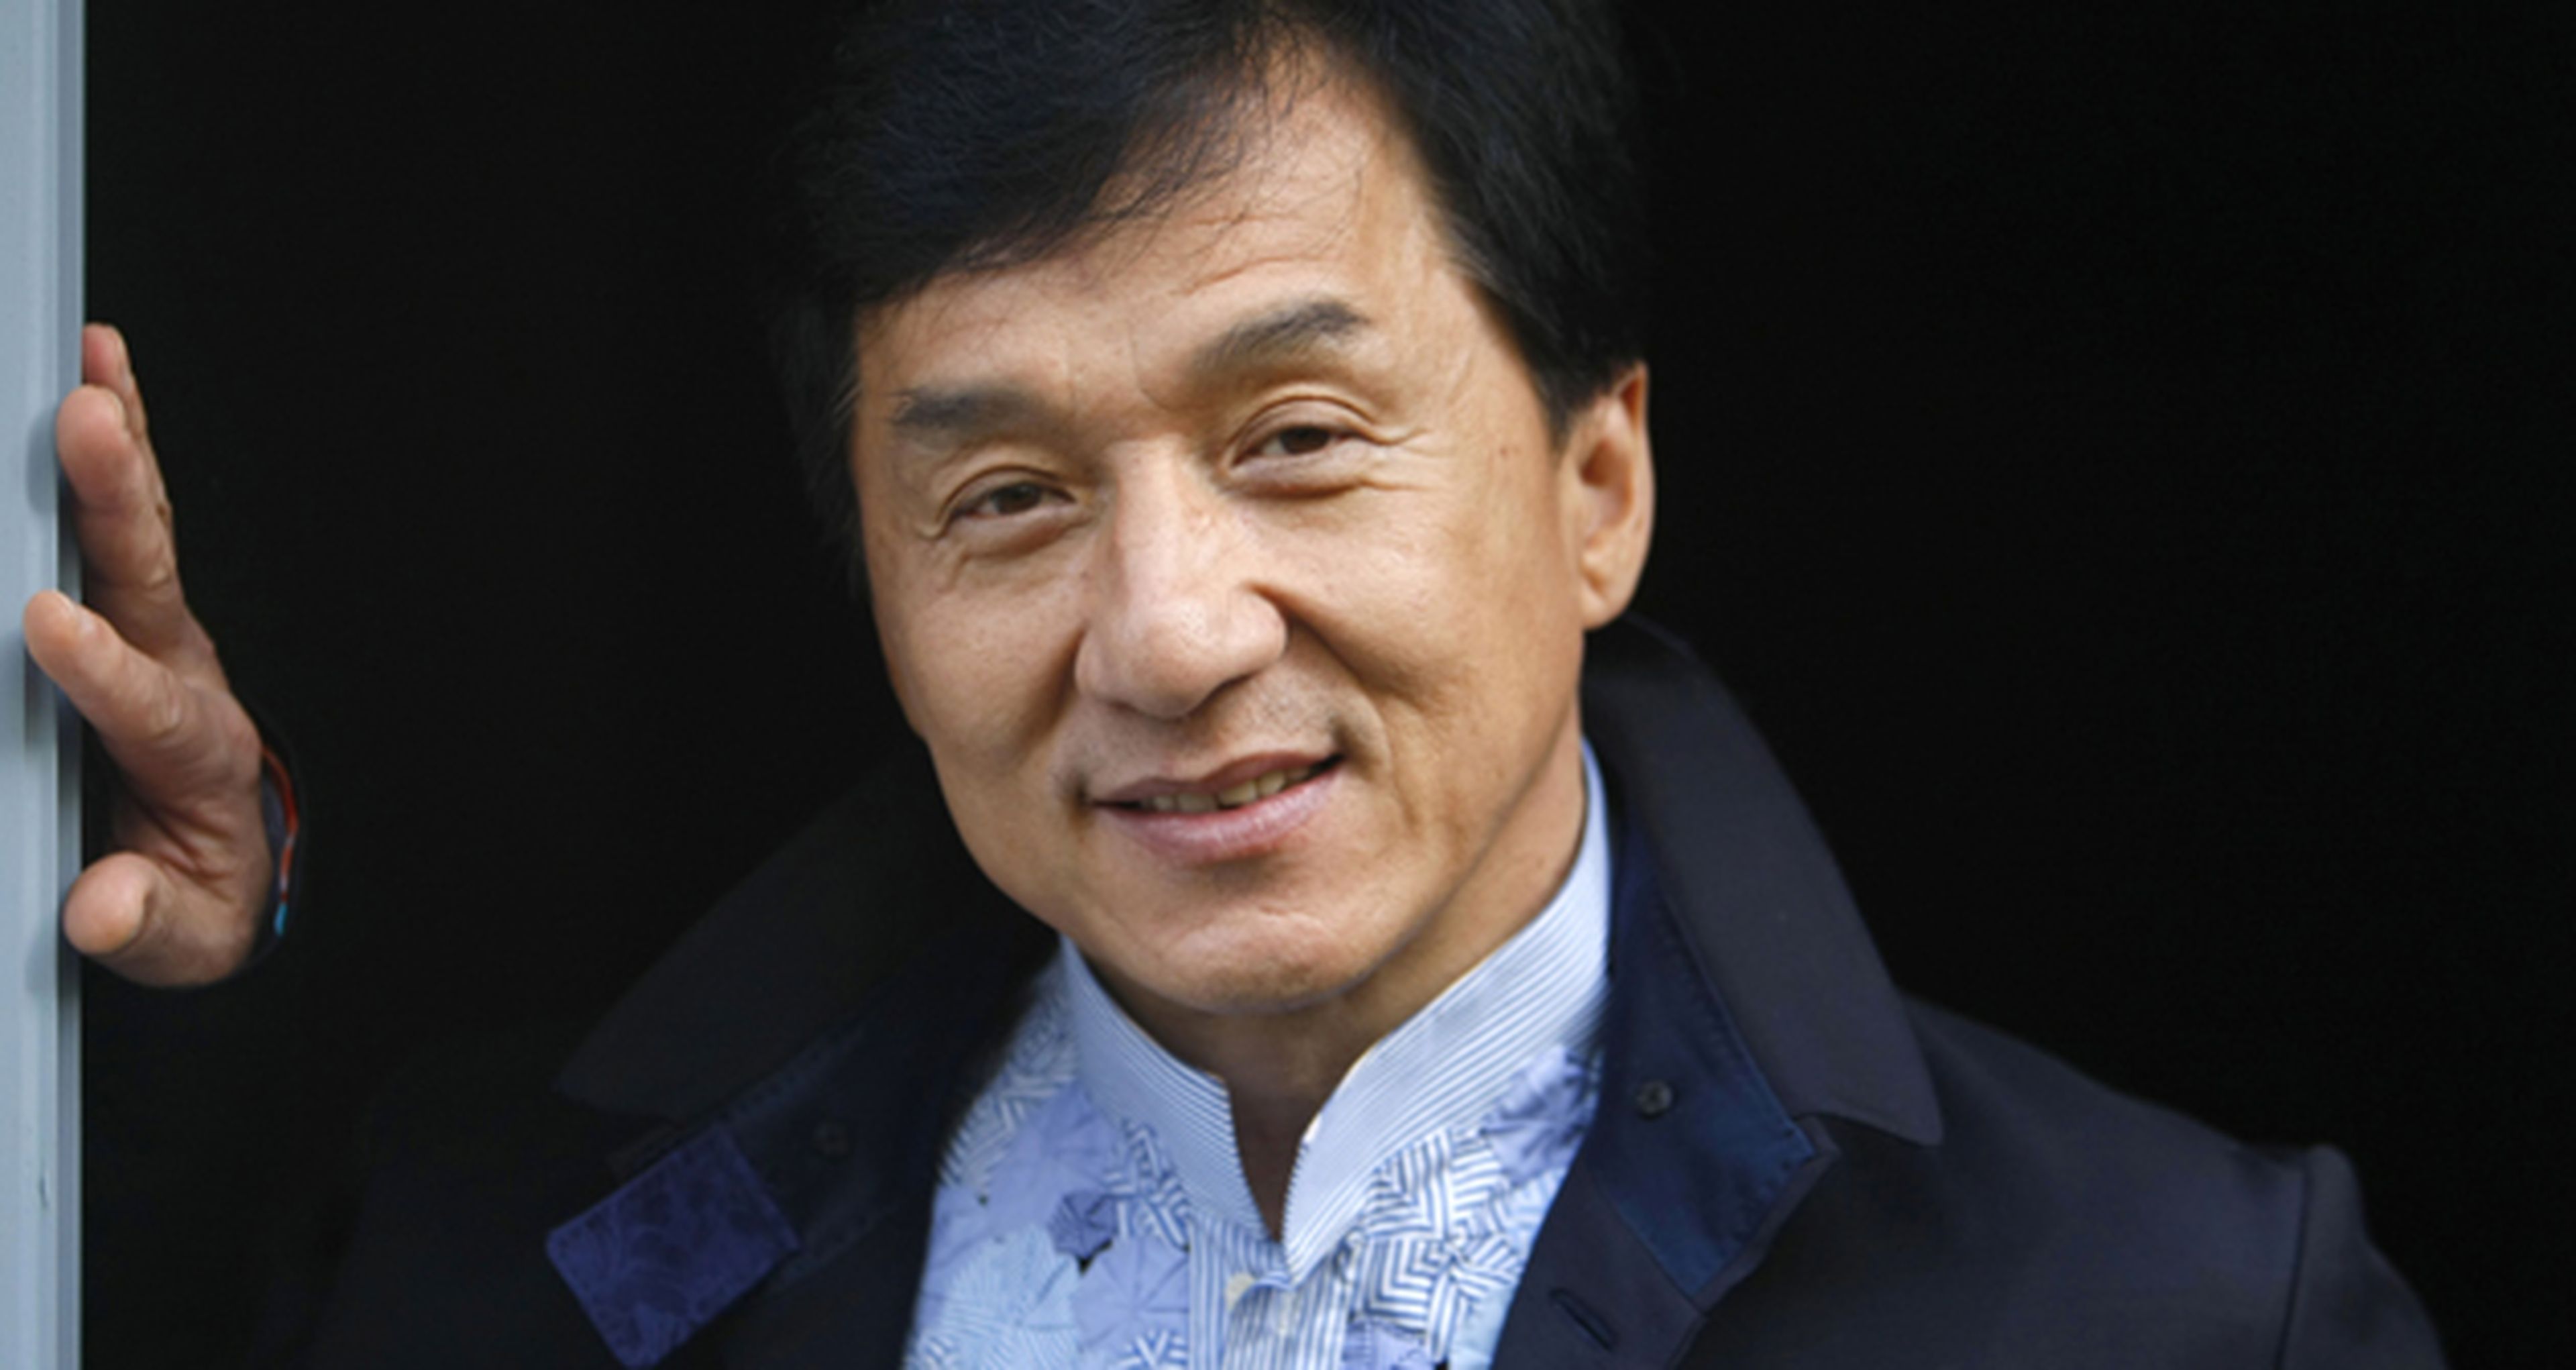 Jackie Chan protagonizará la comedia Skiptrace